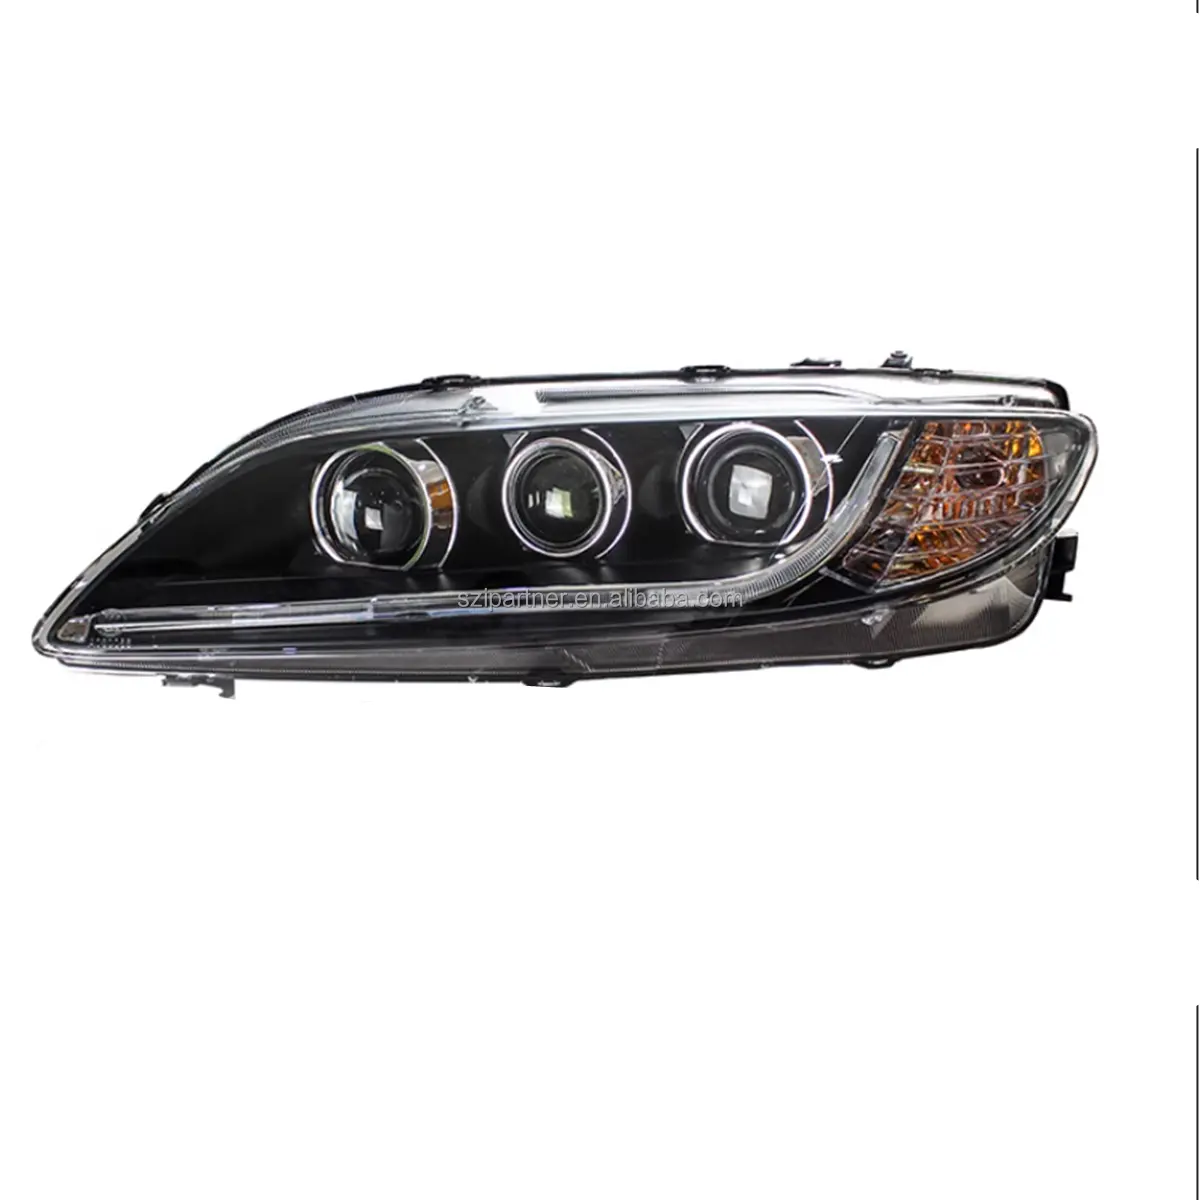 Faros delanteros para Mazda 6 LED Head Lamp Angel Eye LED Daytime Running Light2004-2012